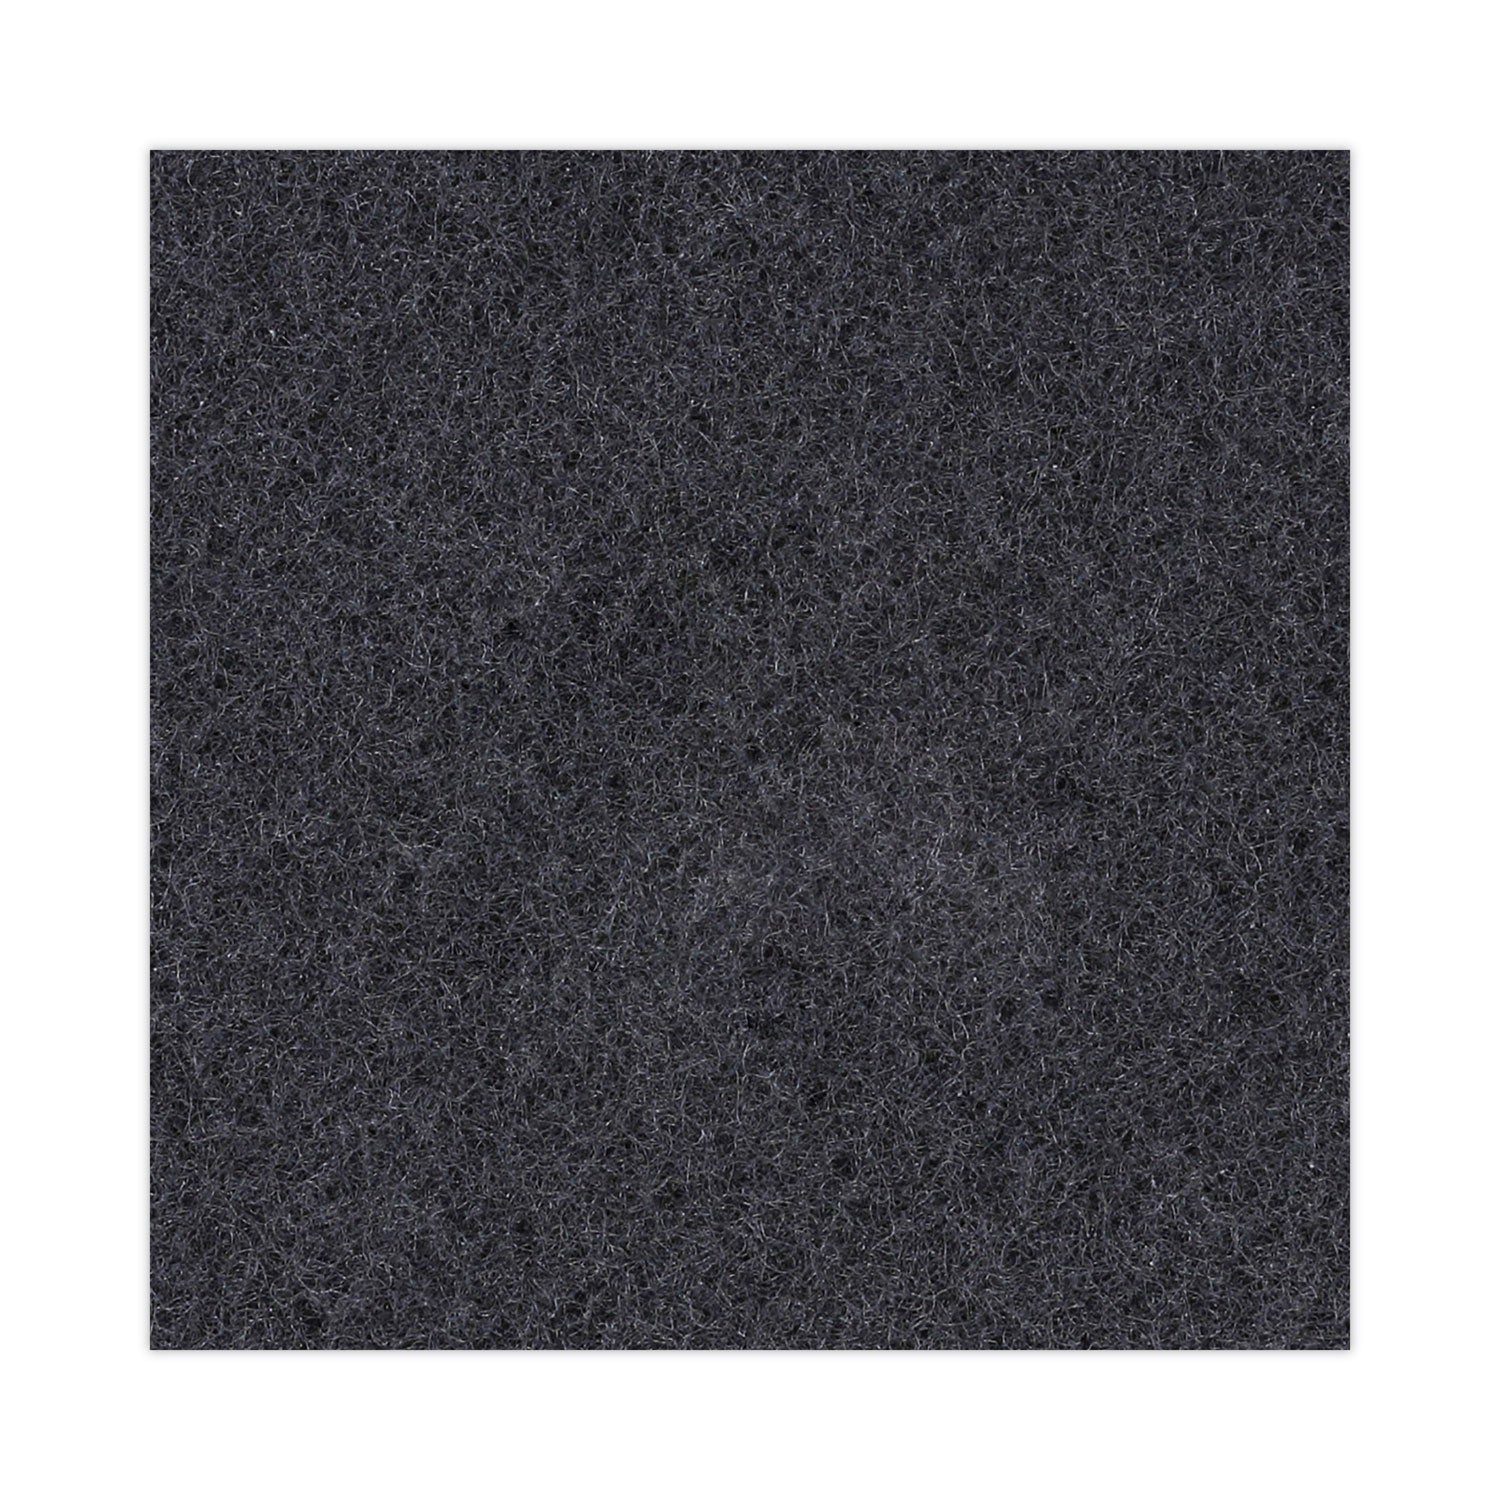 stripping-floor-pads-16-diameter-black-5-carton_bwk4016bla - 6